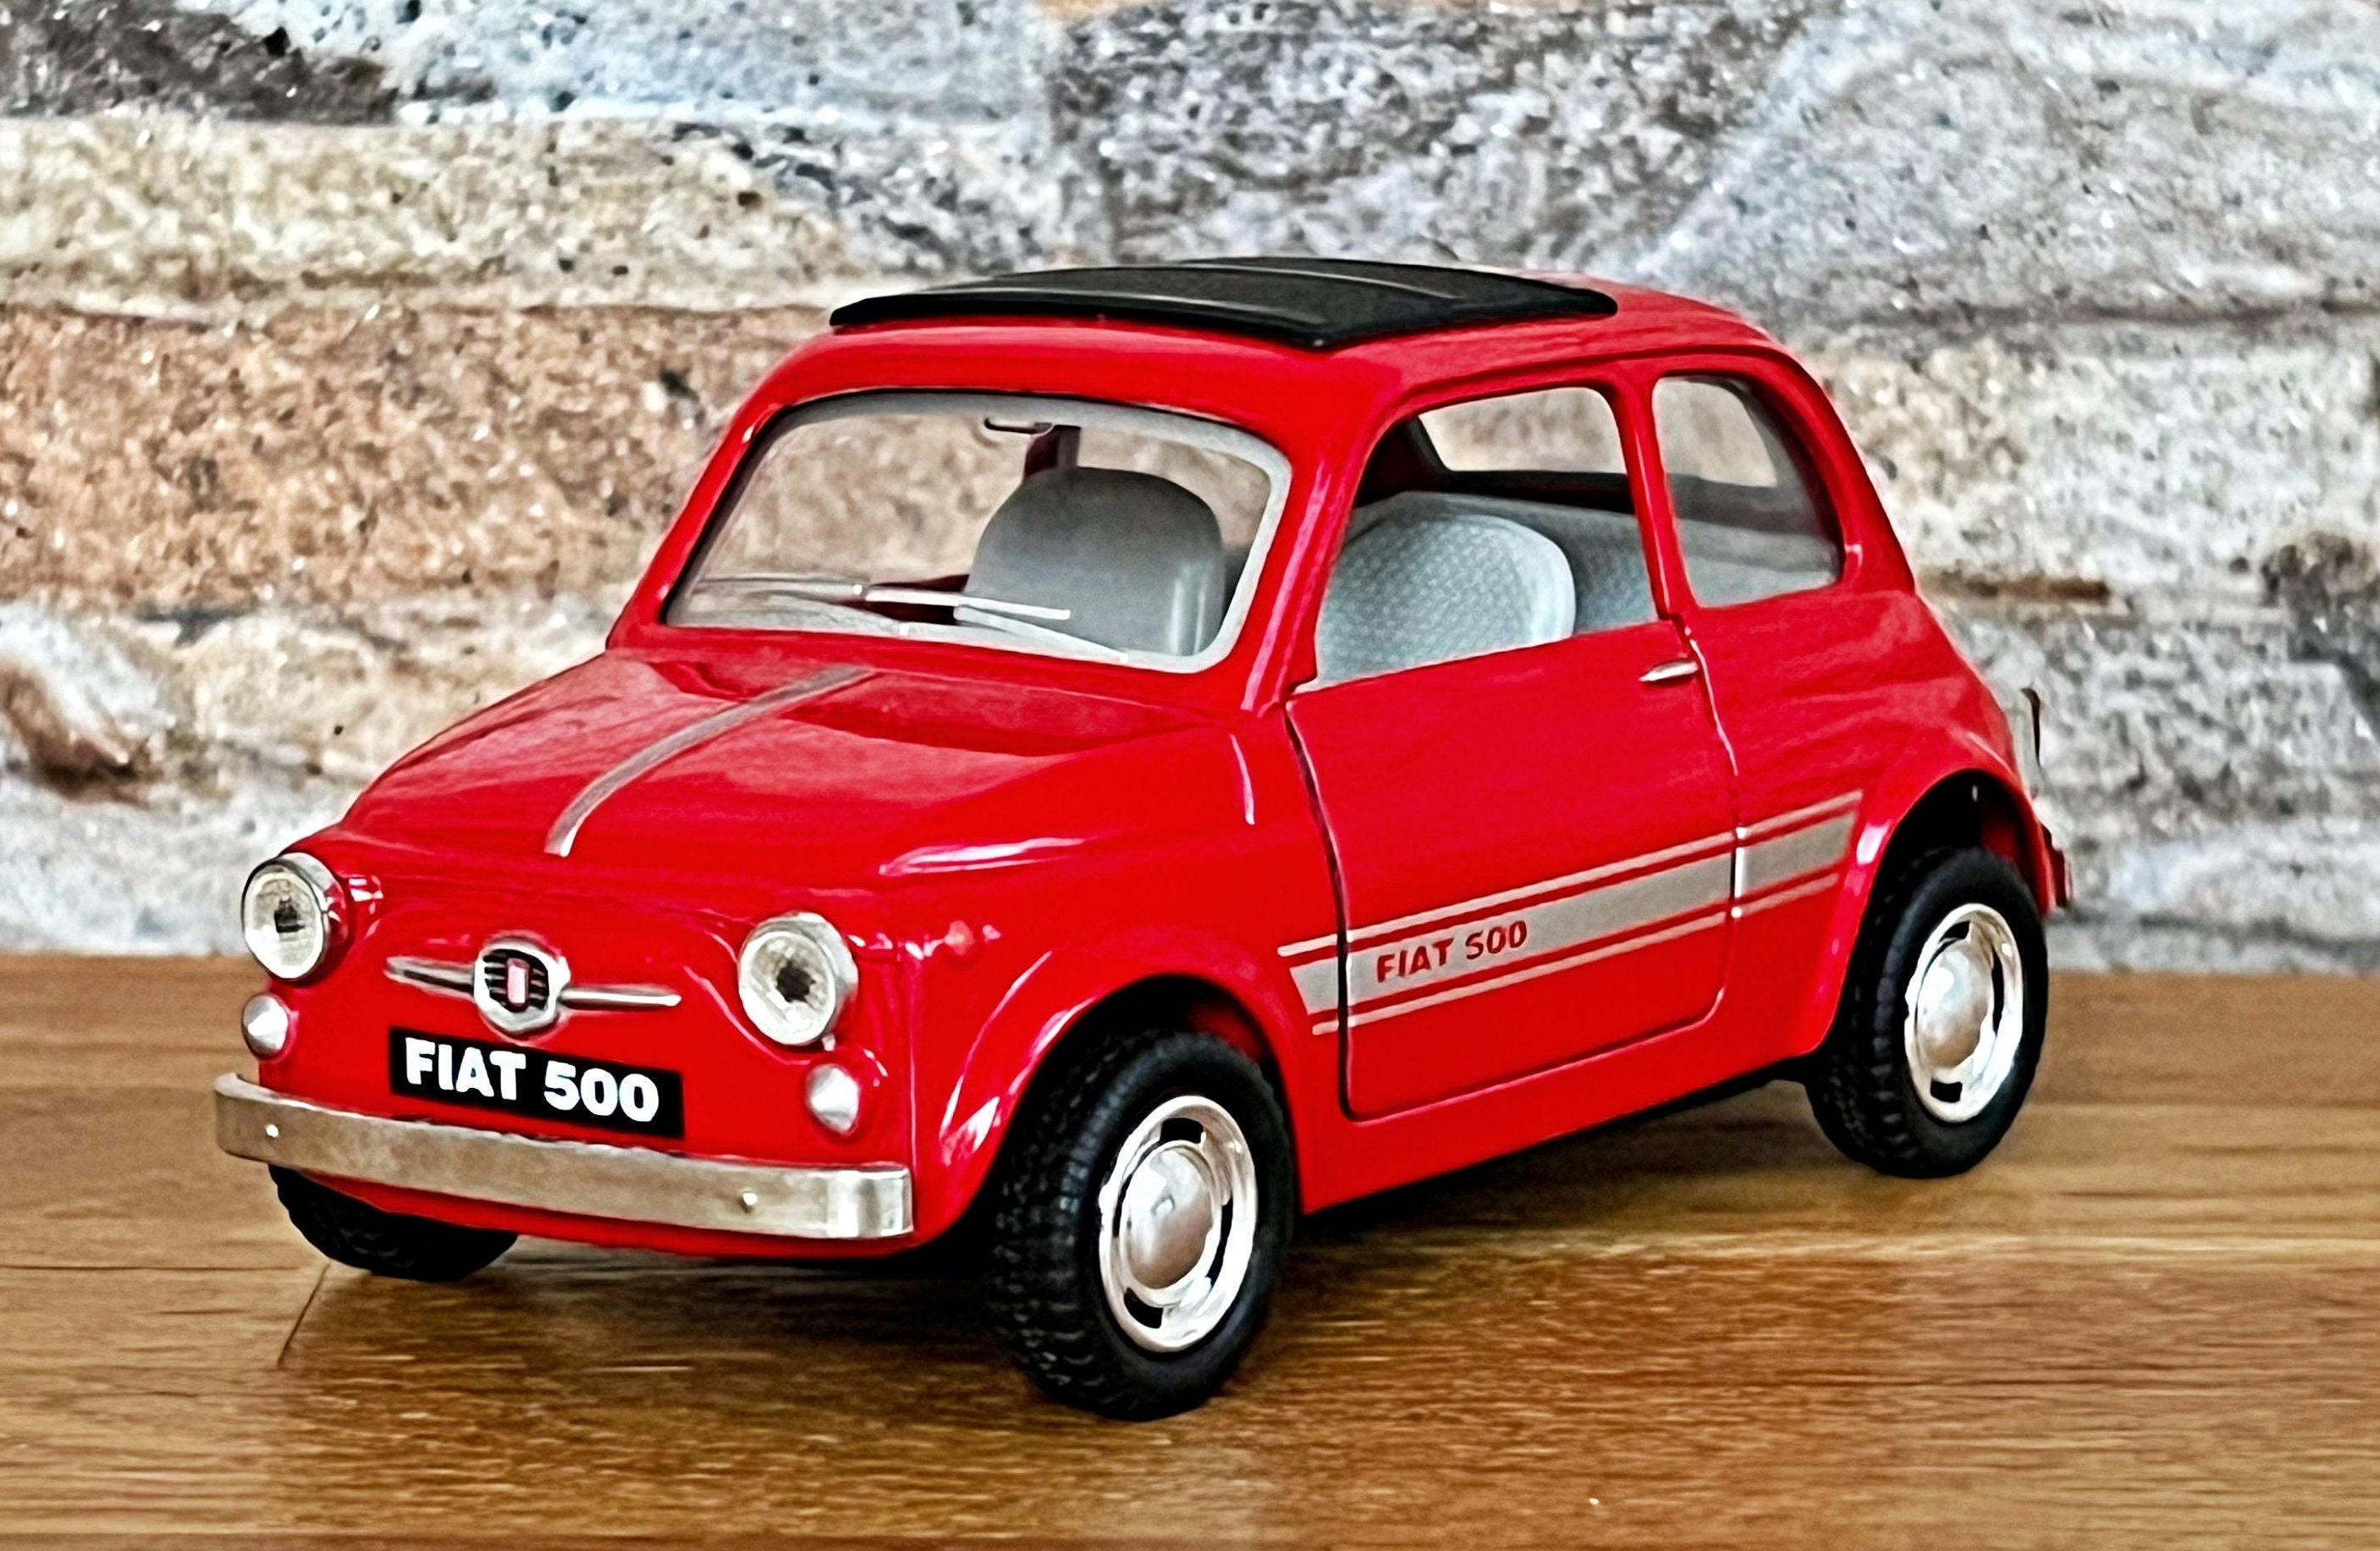 LEGO Classic Iconic Cars Mini Build Toy Set, 71 pc - Kroger